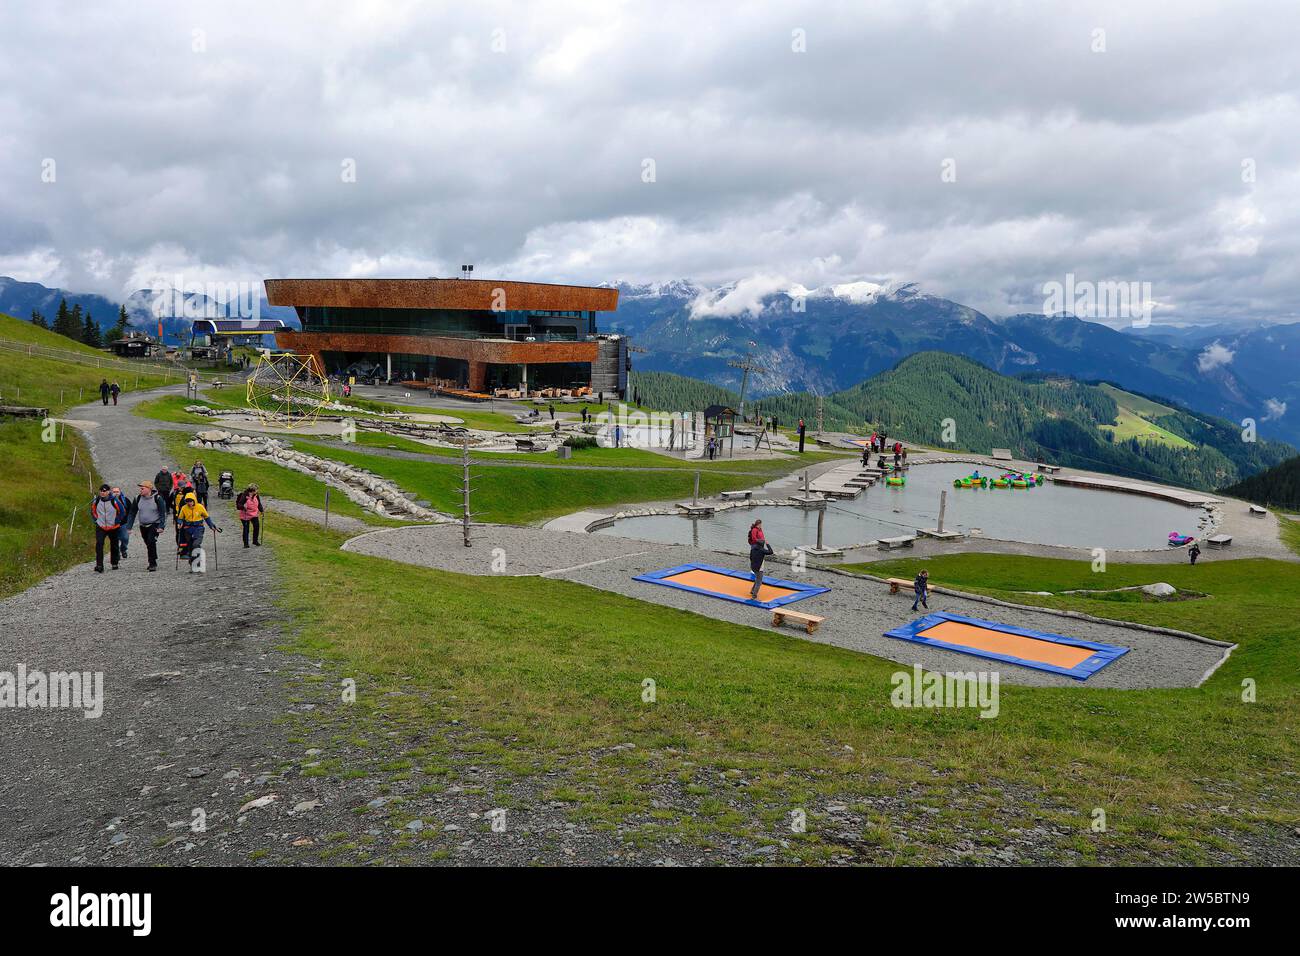 Spieljochbahn mountain station with water park, Fuegen, Tyrol, Austria Stock Photo